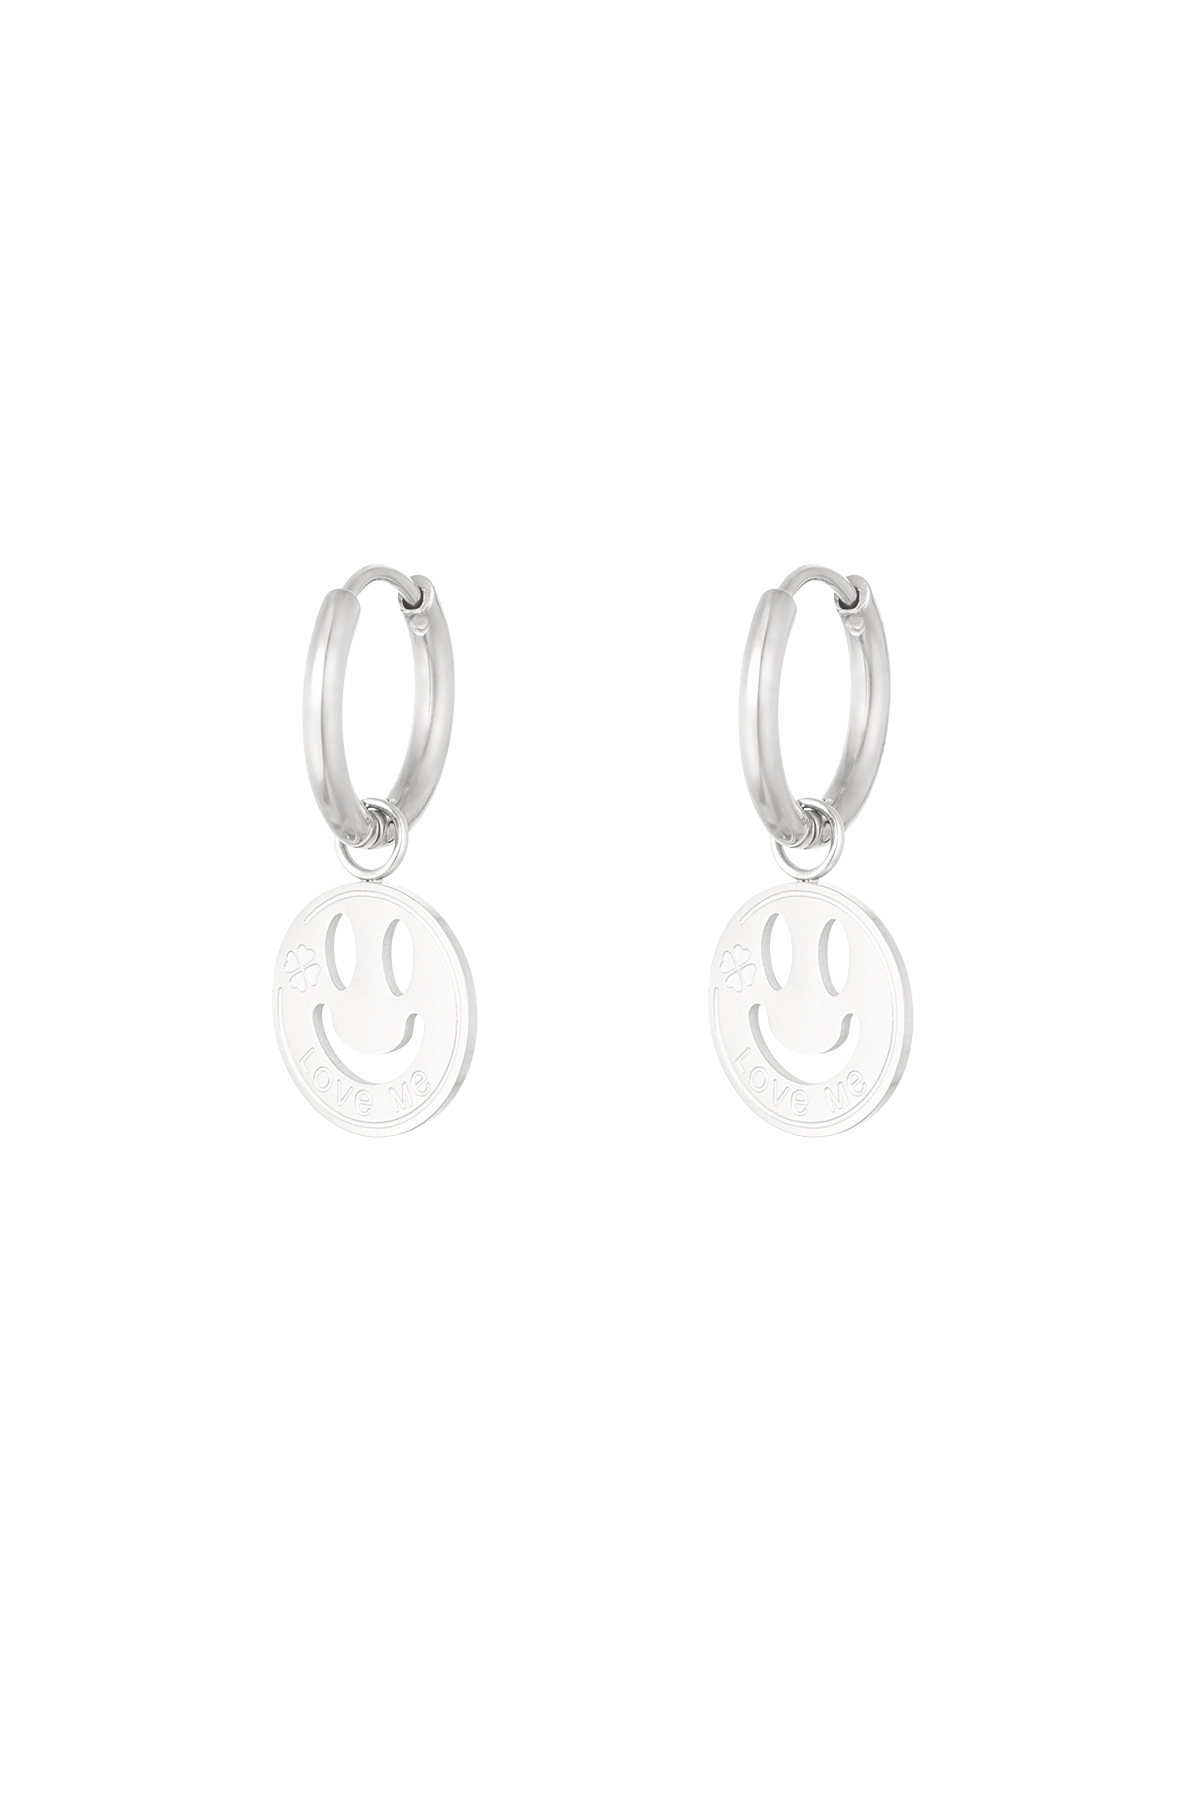 Earrings smiley love - silver h5 